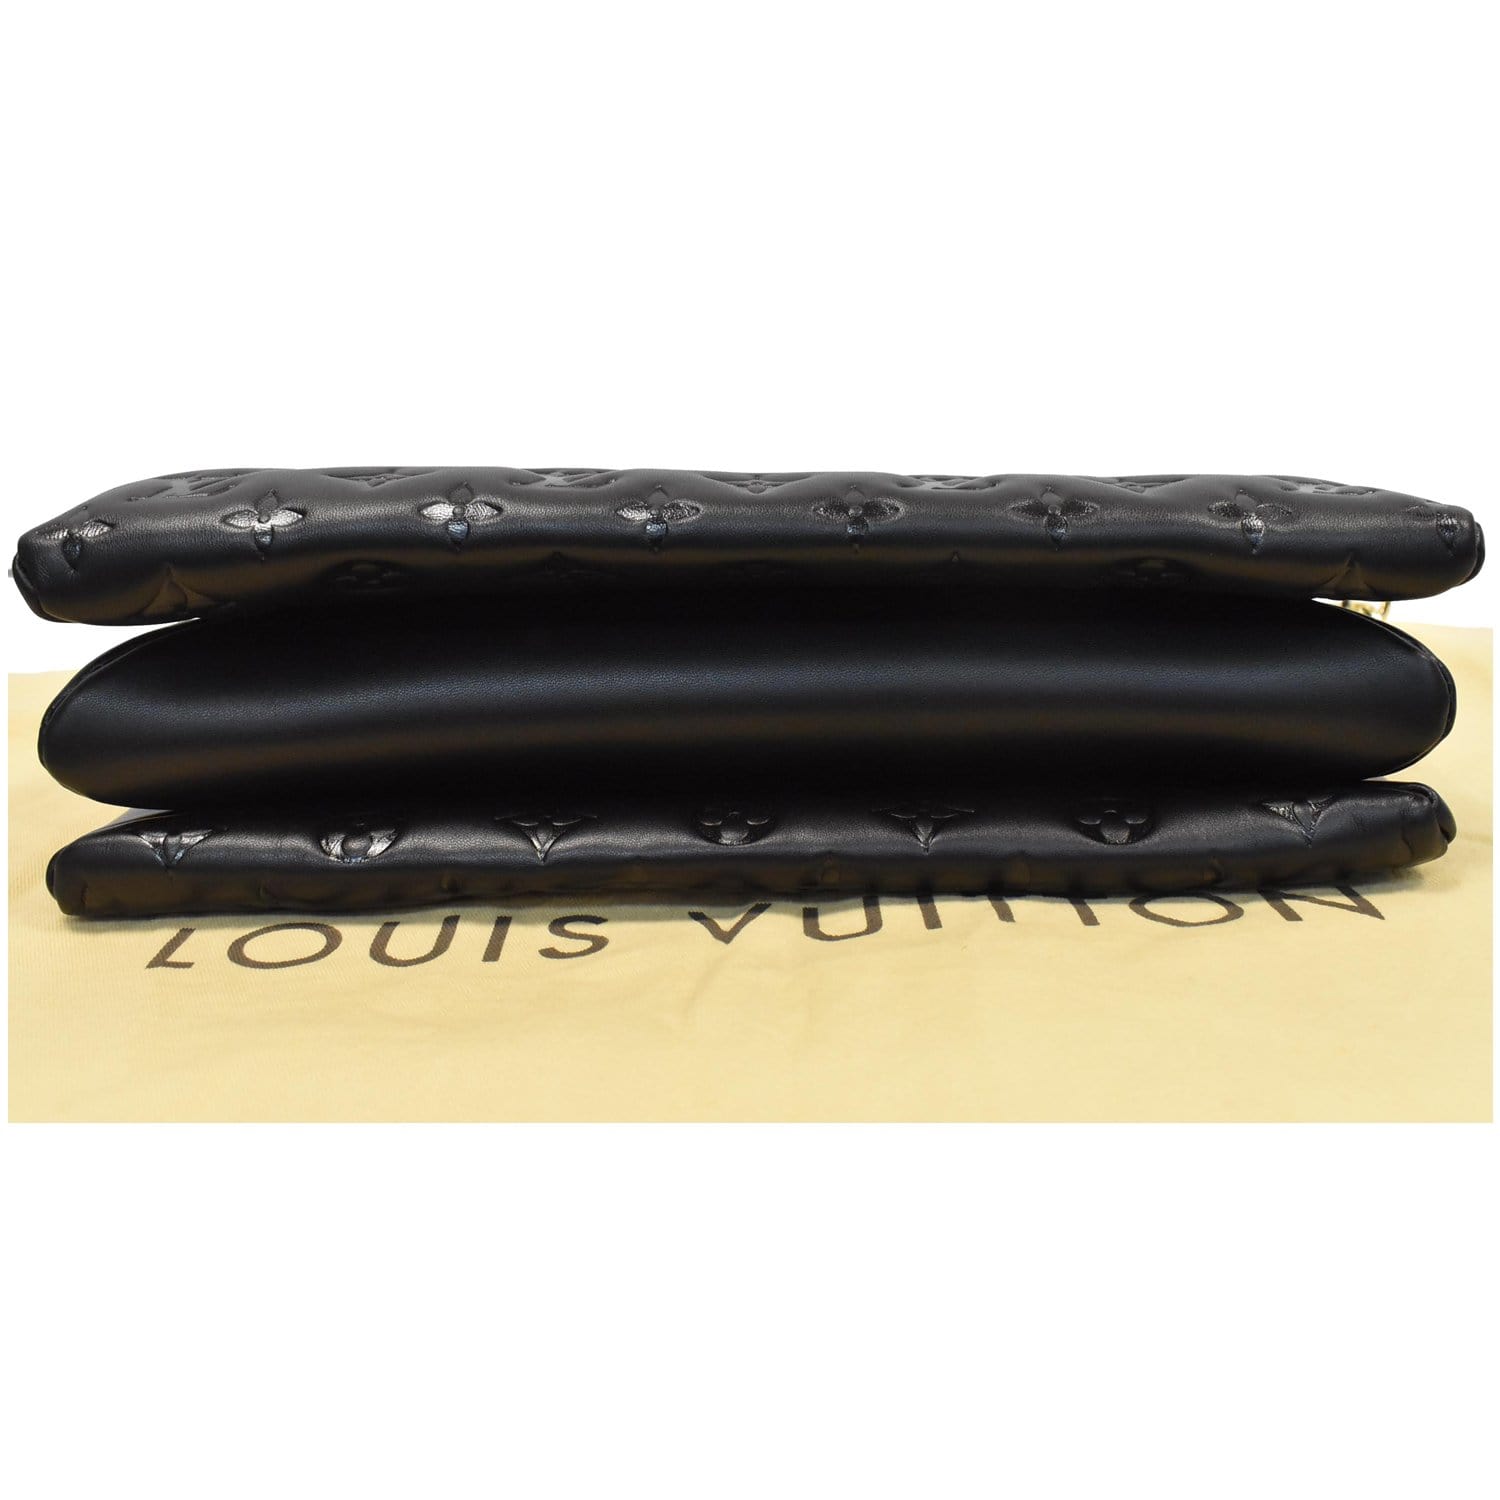 Louis Vuitton Coussin MM in Monogram Noir Lambskin - SOLD